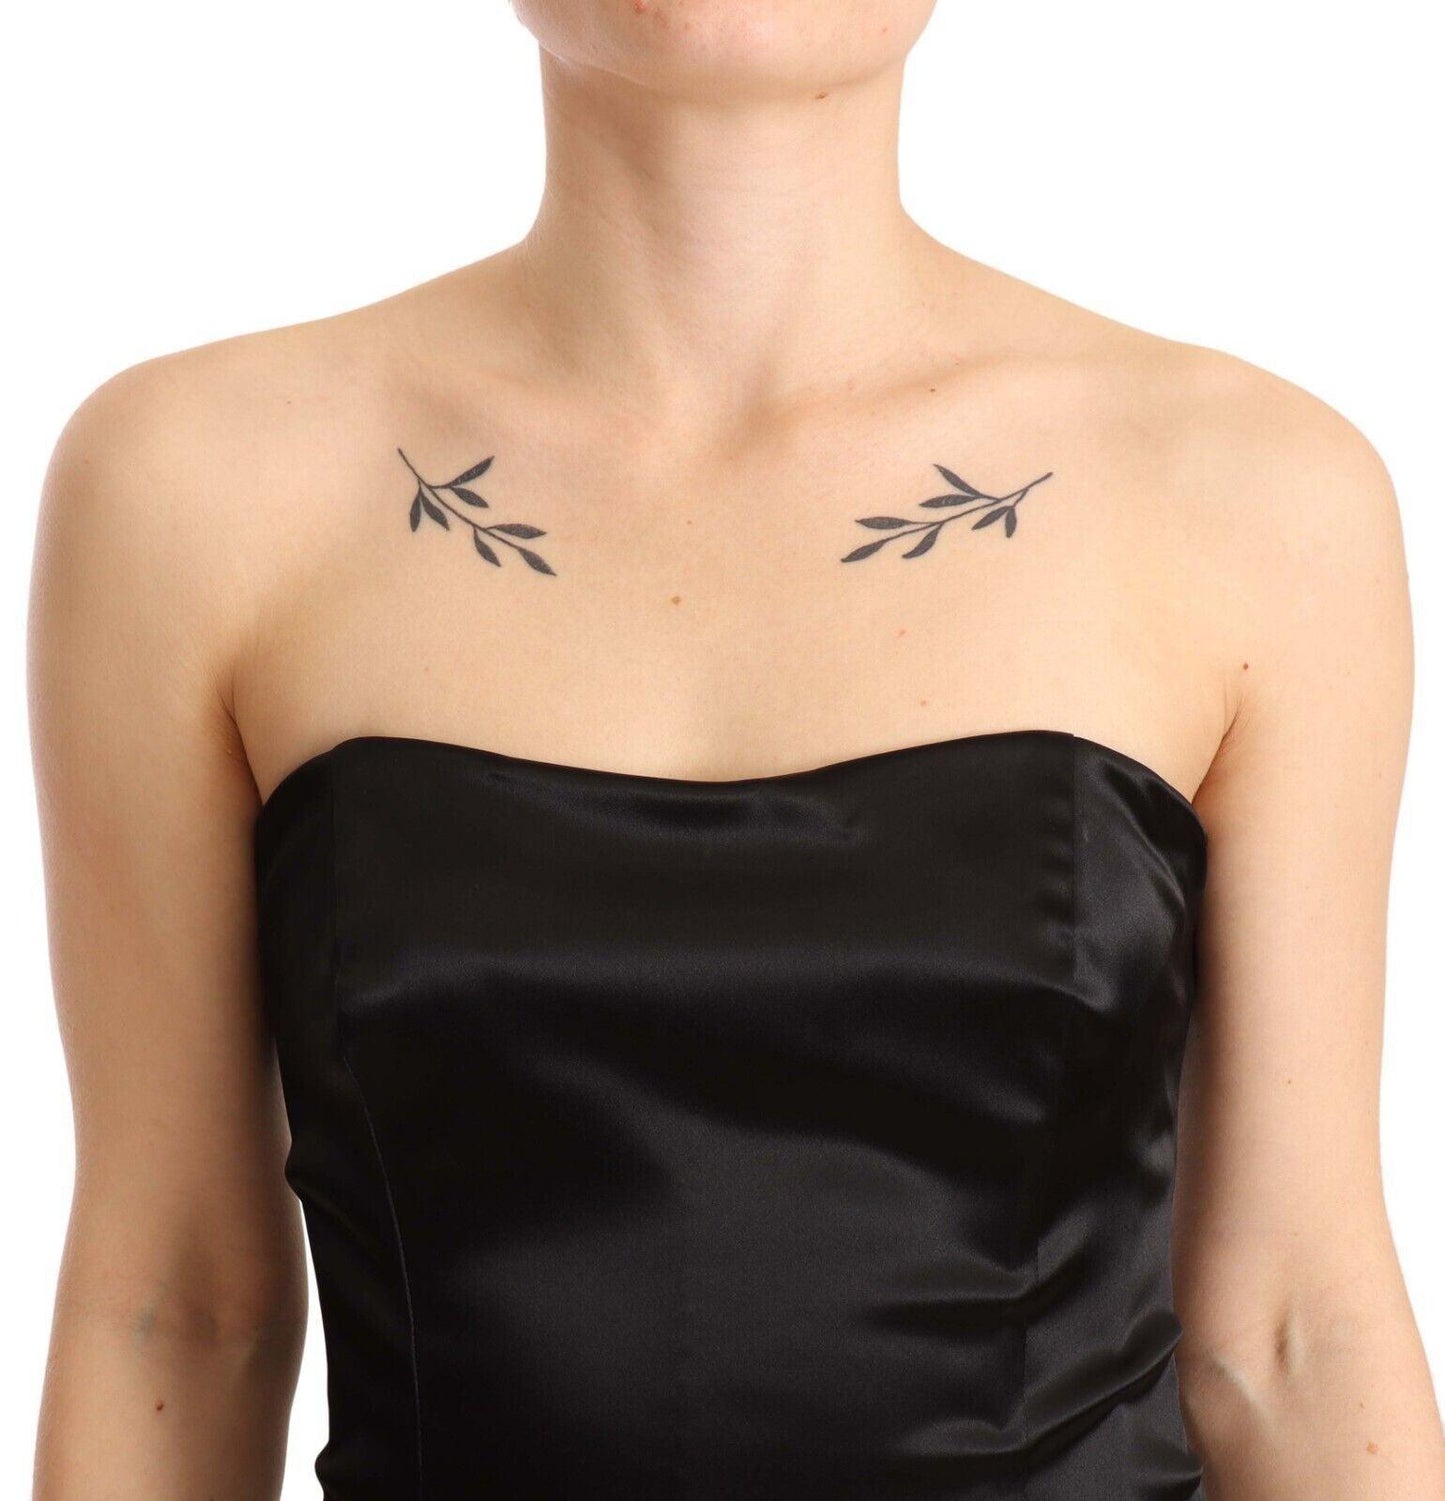 Dolce & Gabbana Elegant Black Strapless Mermaid Dress - PER.FASHION